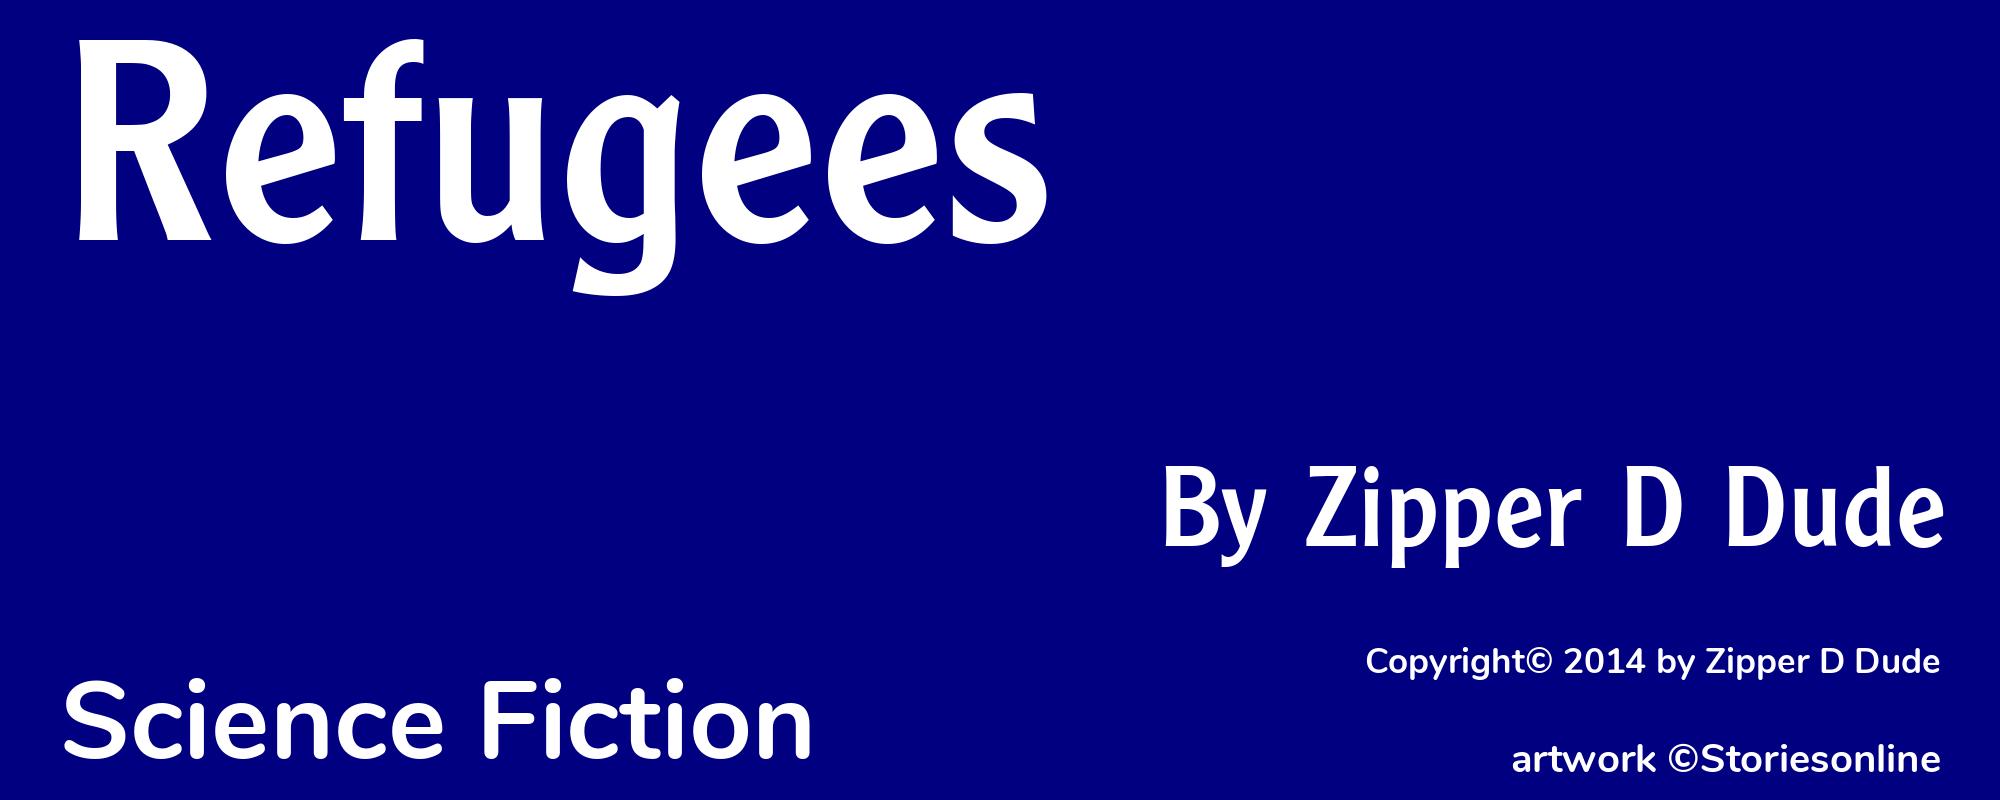 Refugees - Cover